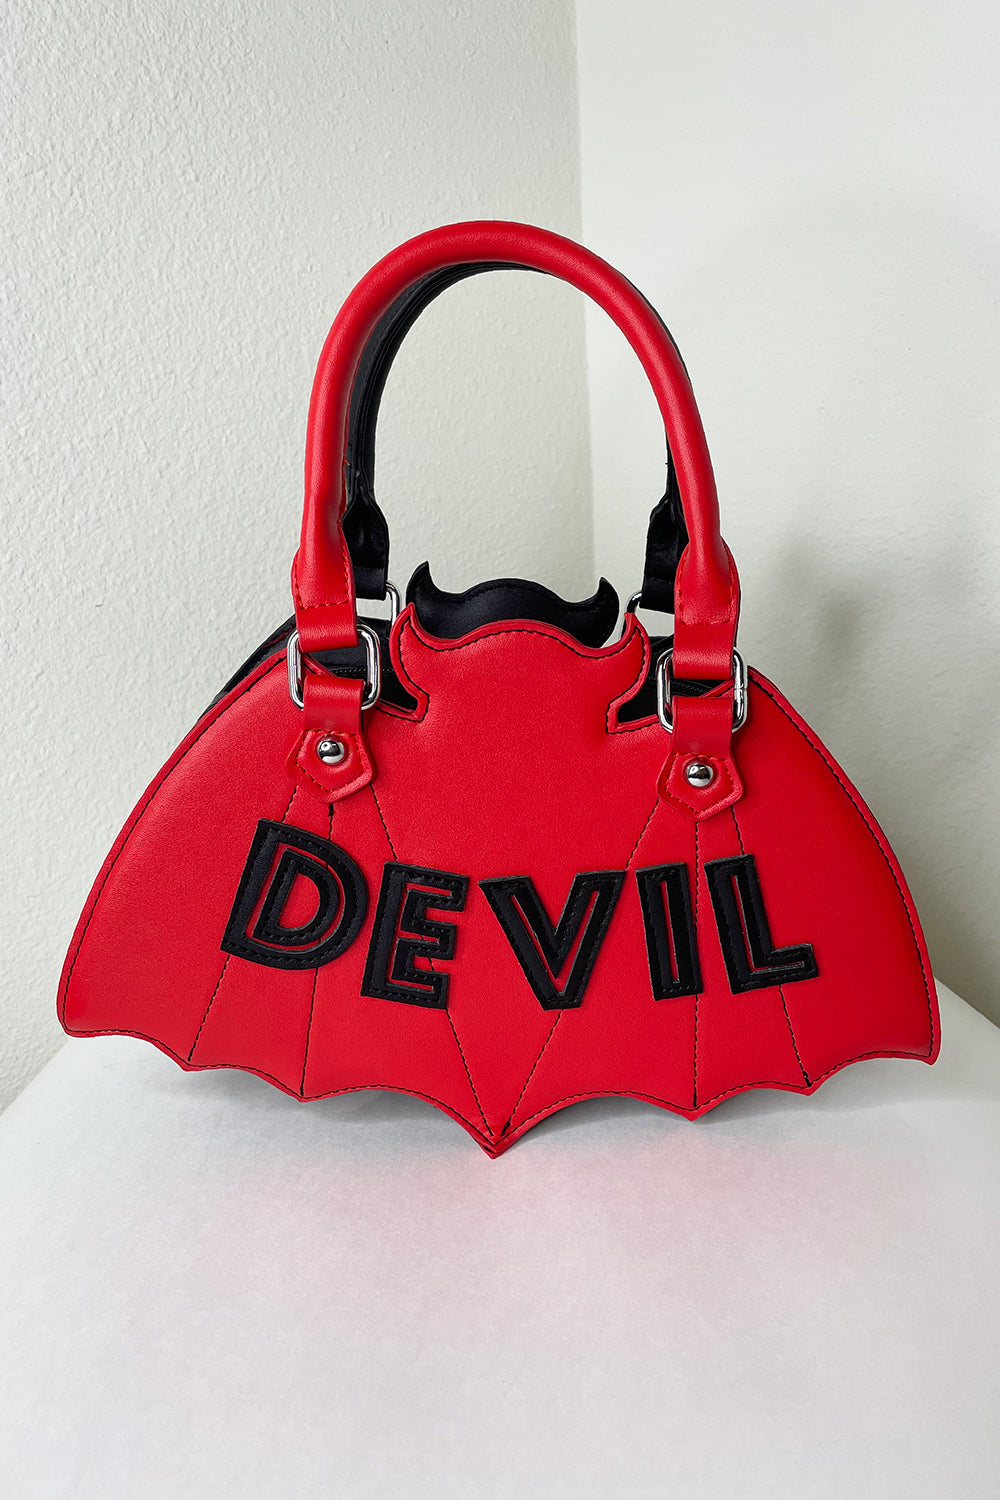 Buy MARSHLAND Latest Shoulder Bag for Girls Stylish Purse and Handbags  Small Crossbody Bags (Black-Black) at .in